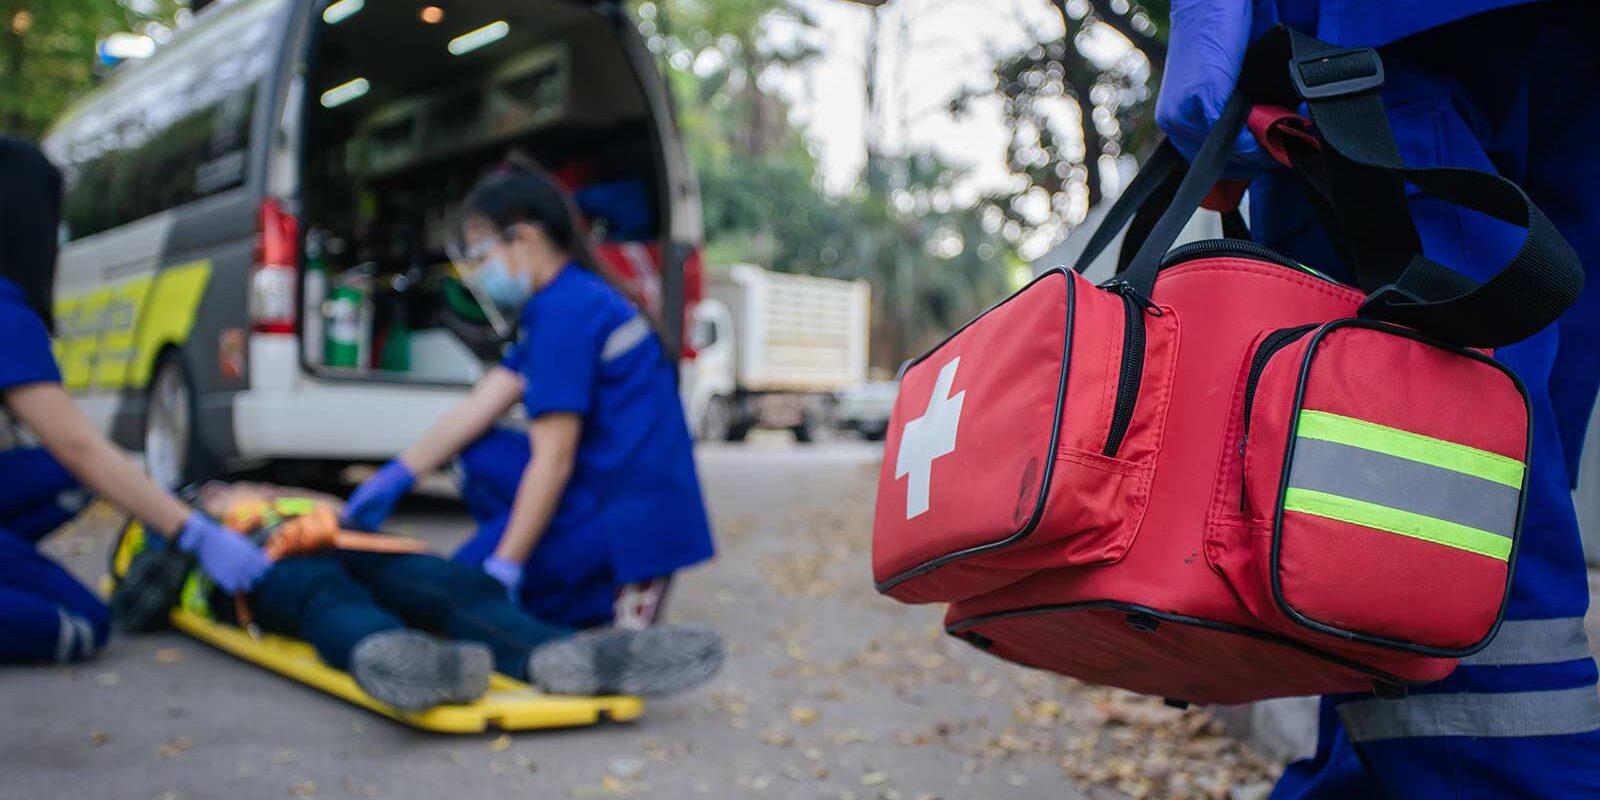 Ambulance Emergency Workers